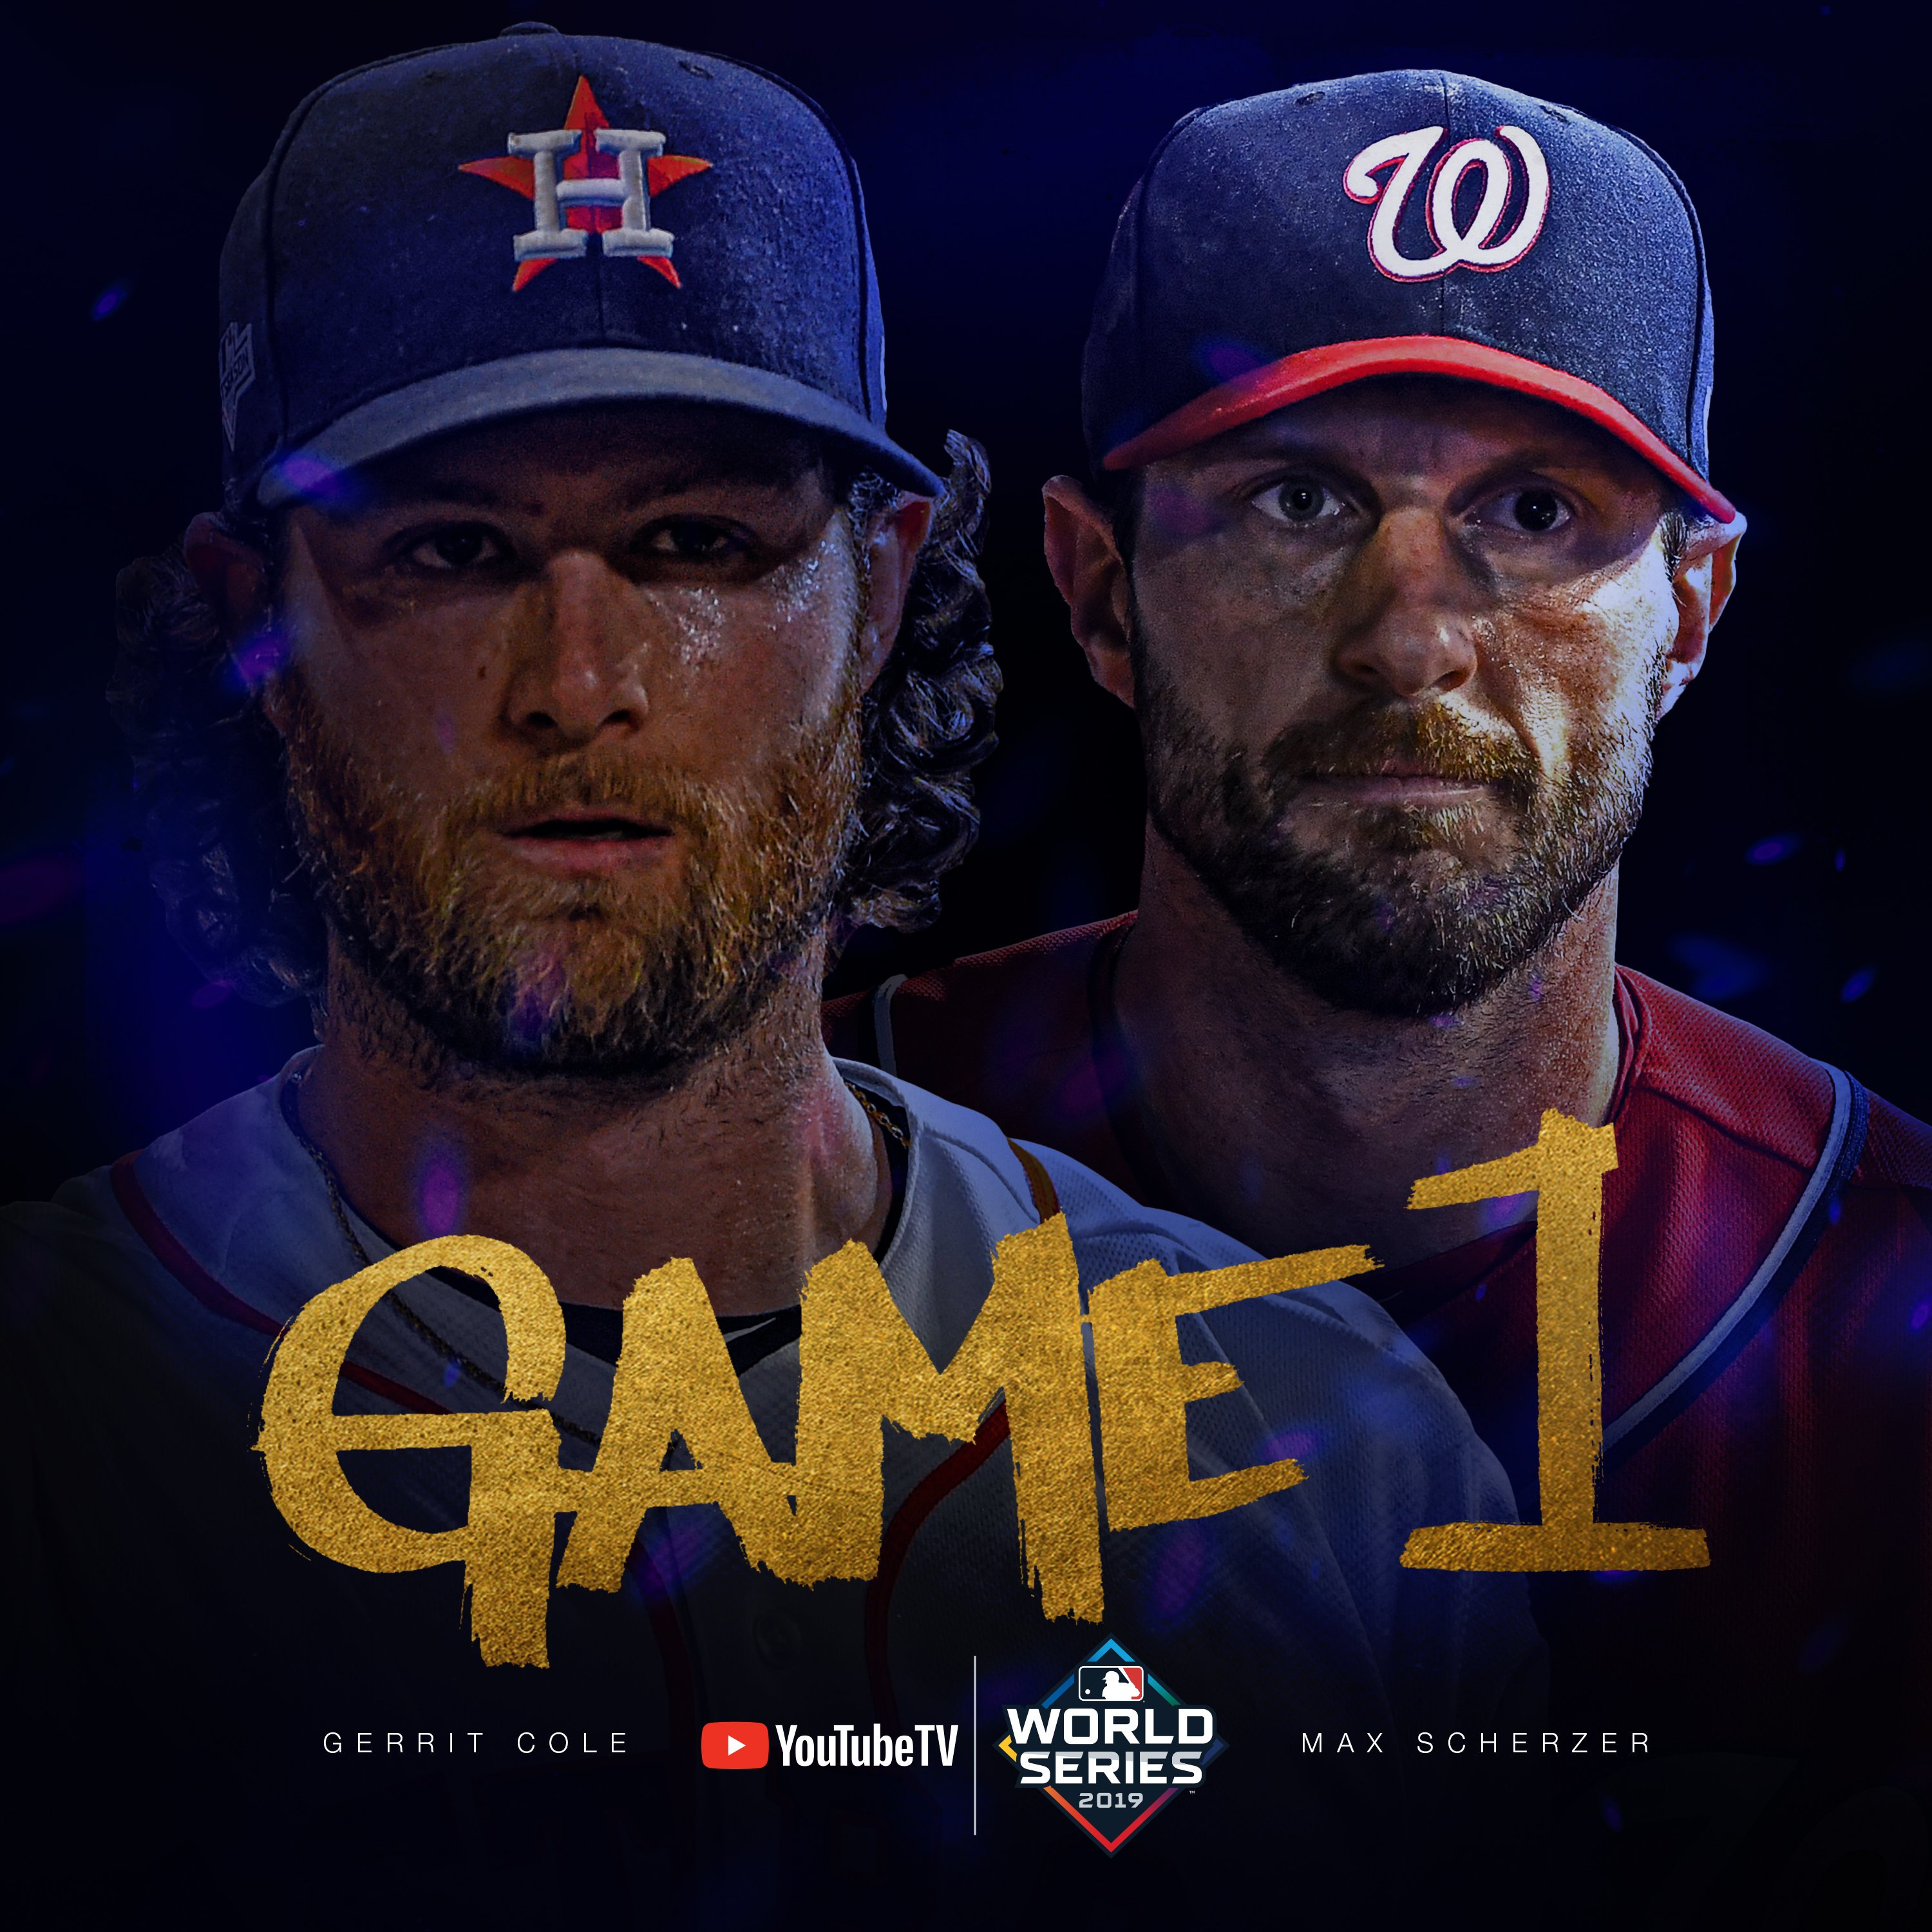 World Series 2019: Houston Astros vs Washington Nationals Game 1 Preview